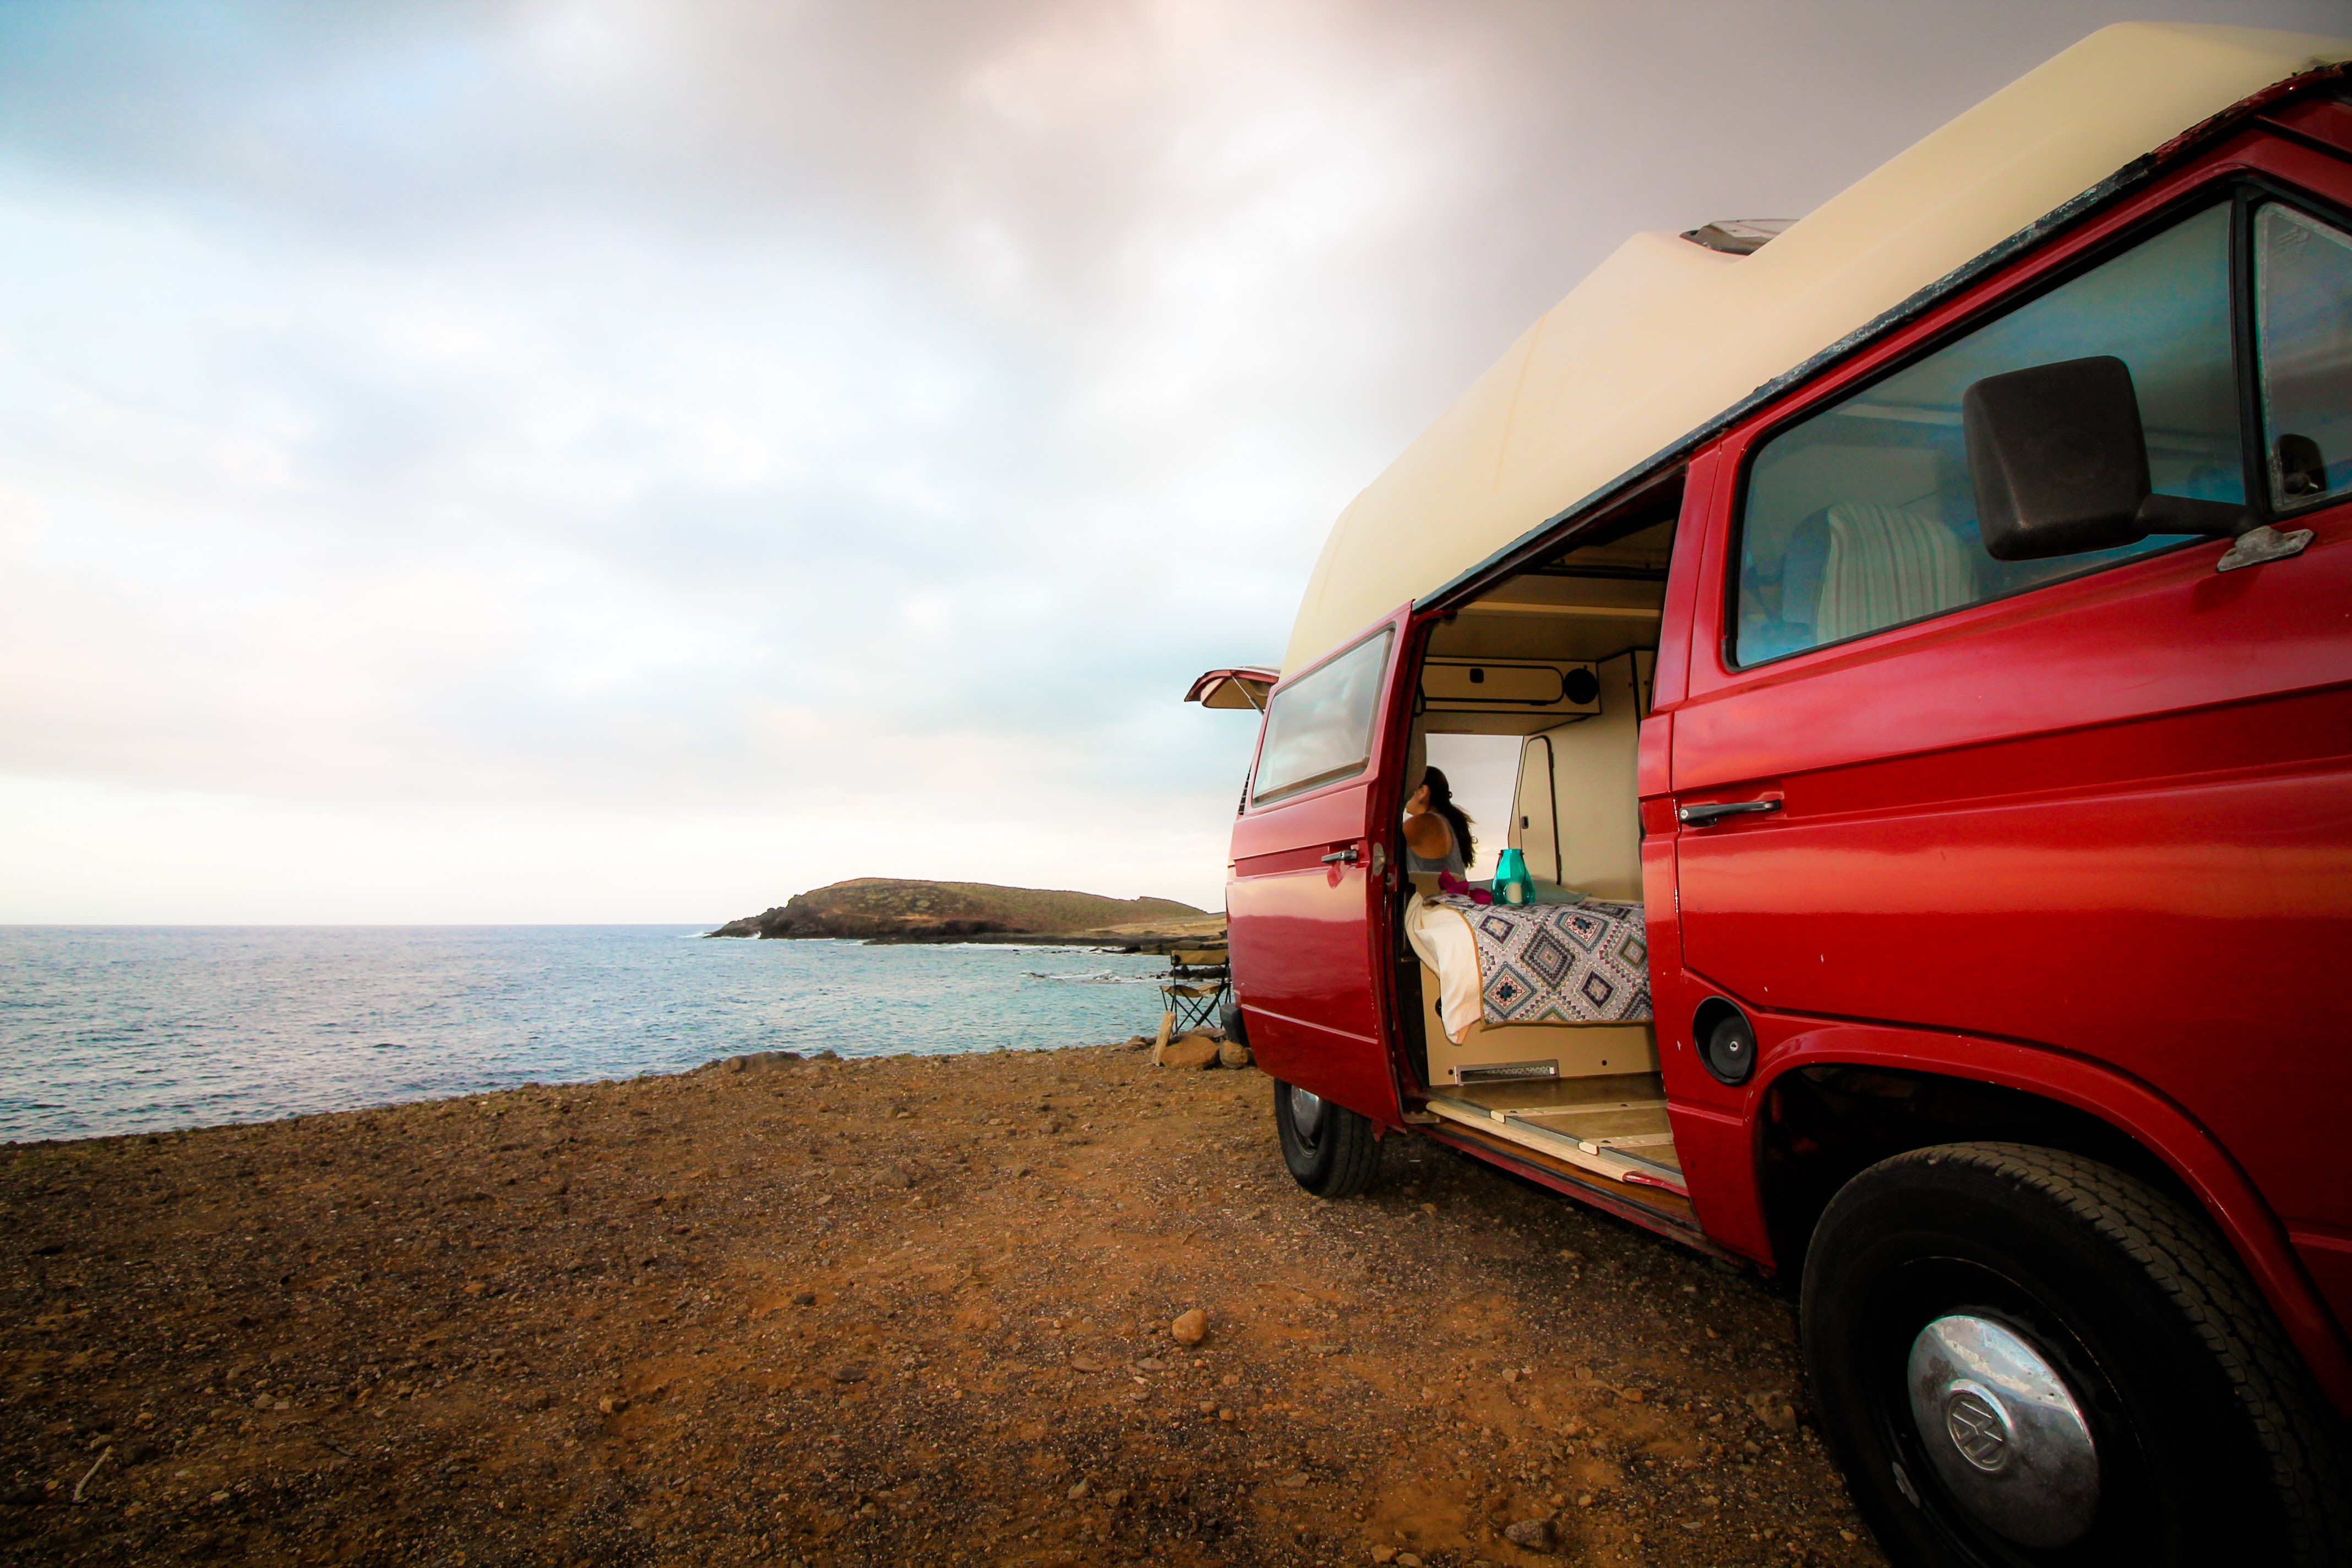 Pippie Vw t3 Holidayscampervans - Campervans/Motorhomes for Rent in Santa  Cruz de Tenerife, Canarias, Spain - Airbnb